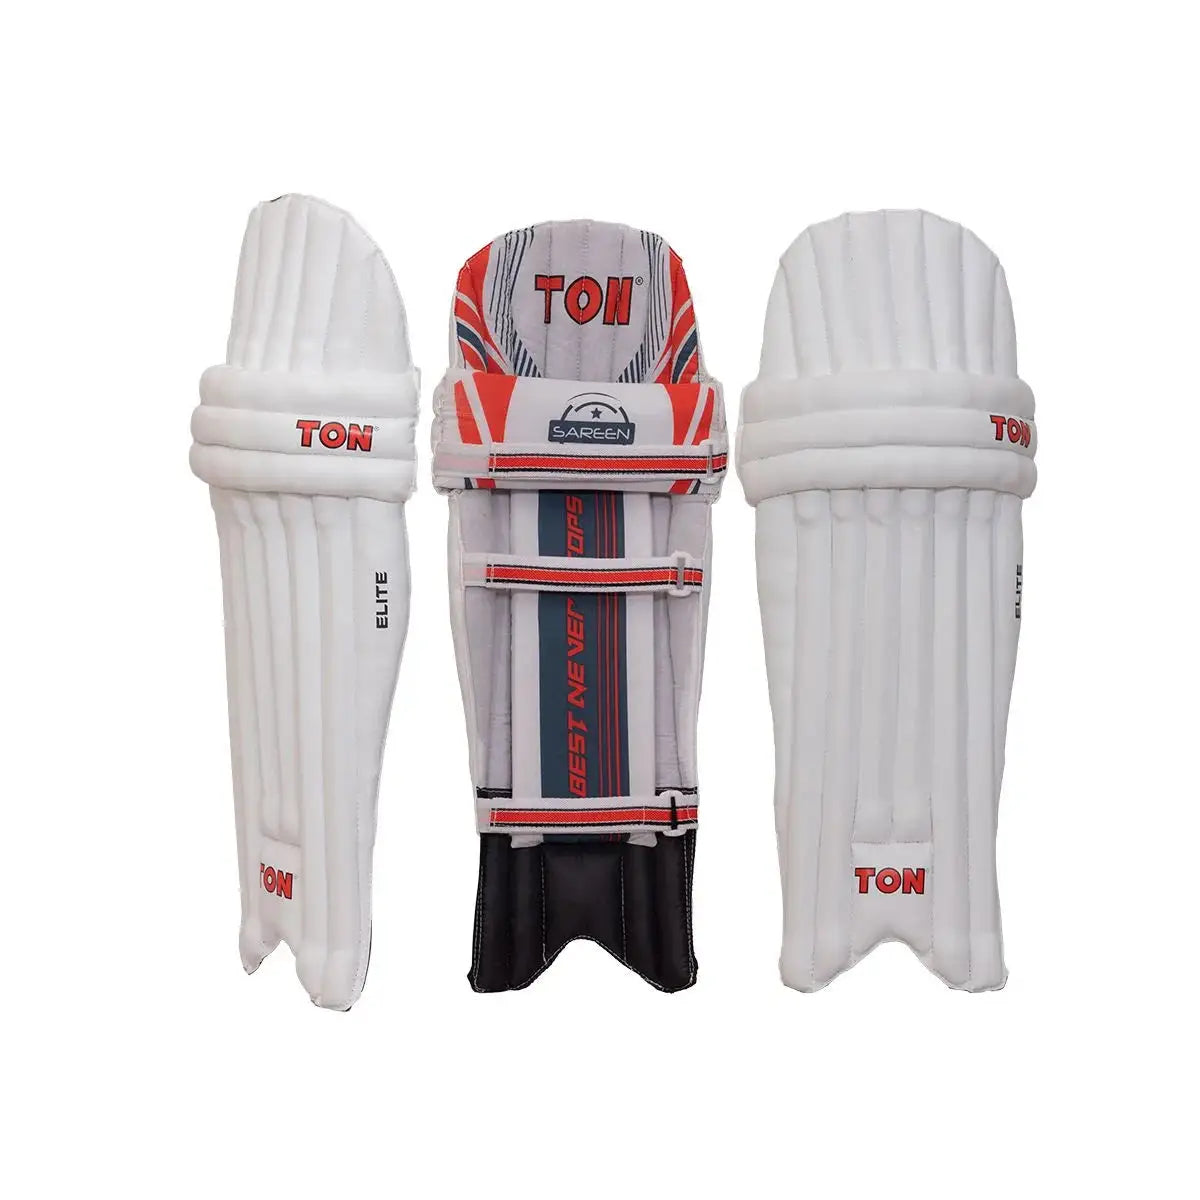 SS TON Elite Cricket Batting Pads- Premium Quality and Lightweight For Boys - Boys - PADS - BATTING